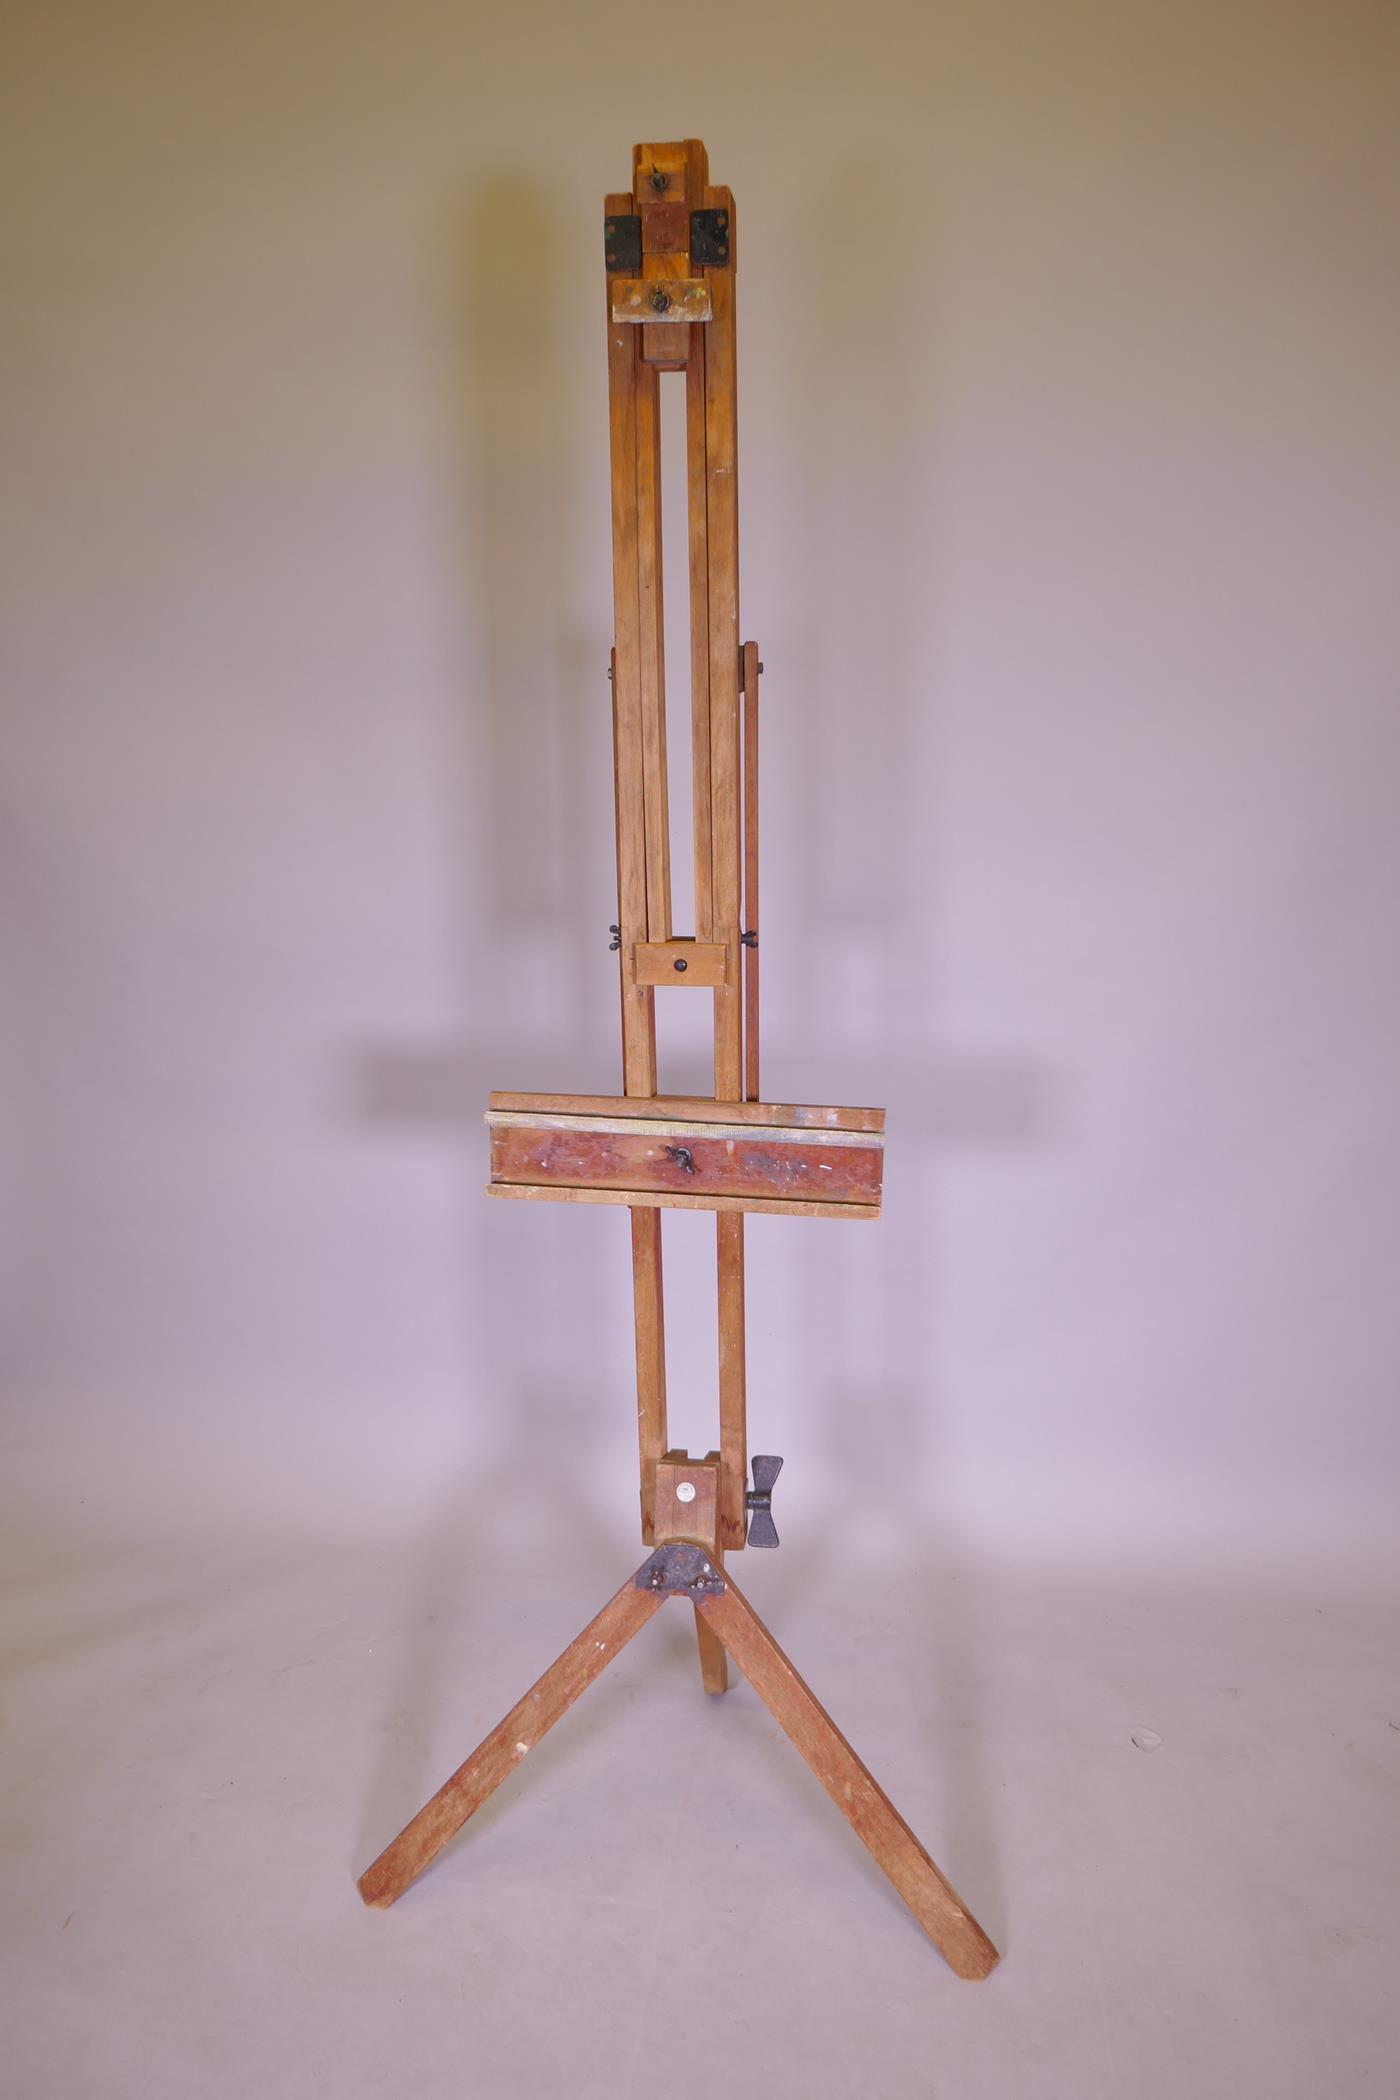 A Windsor and Newton folding artist's easel, 194cm high